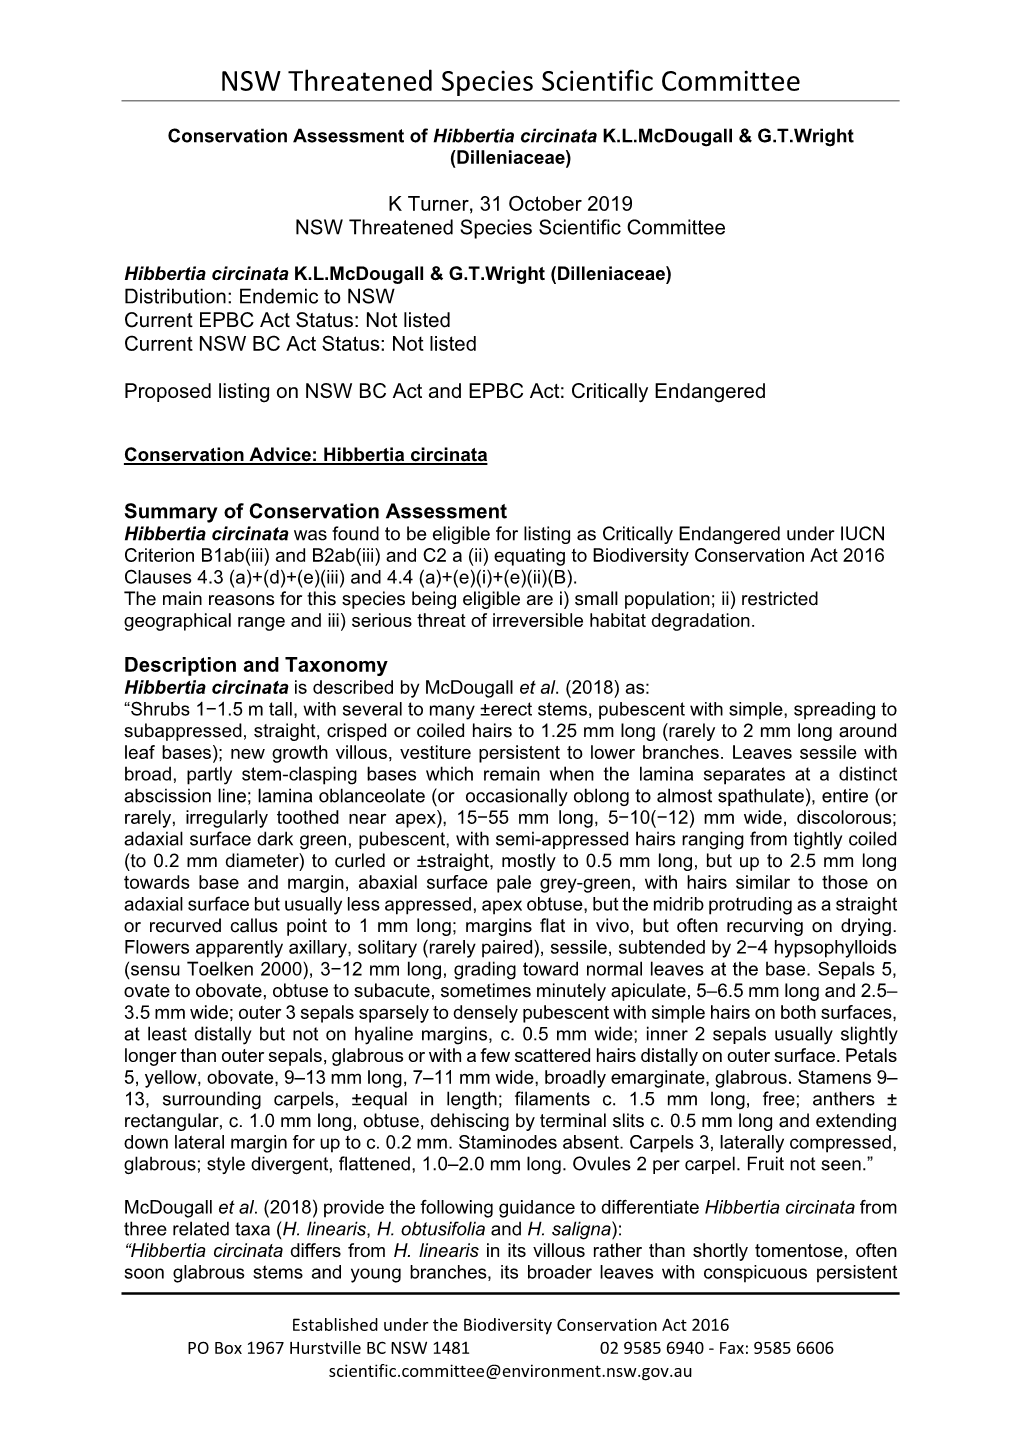 Conservation-Assessment-Hibbertia-Circinata.Pdf